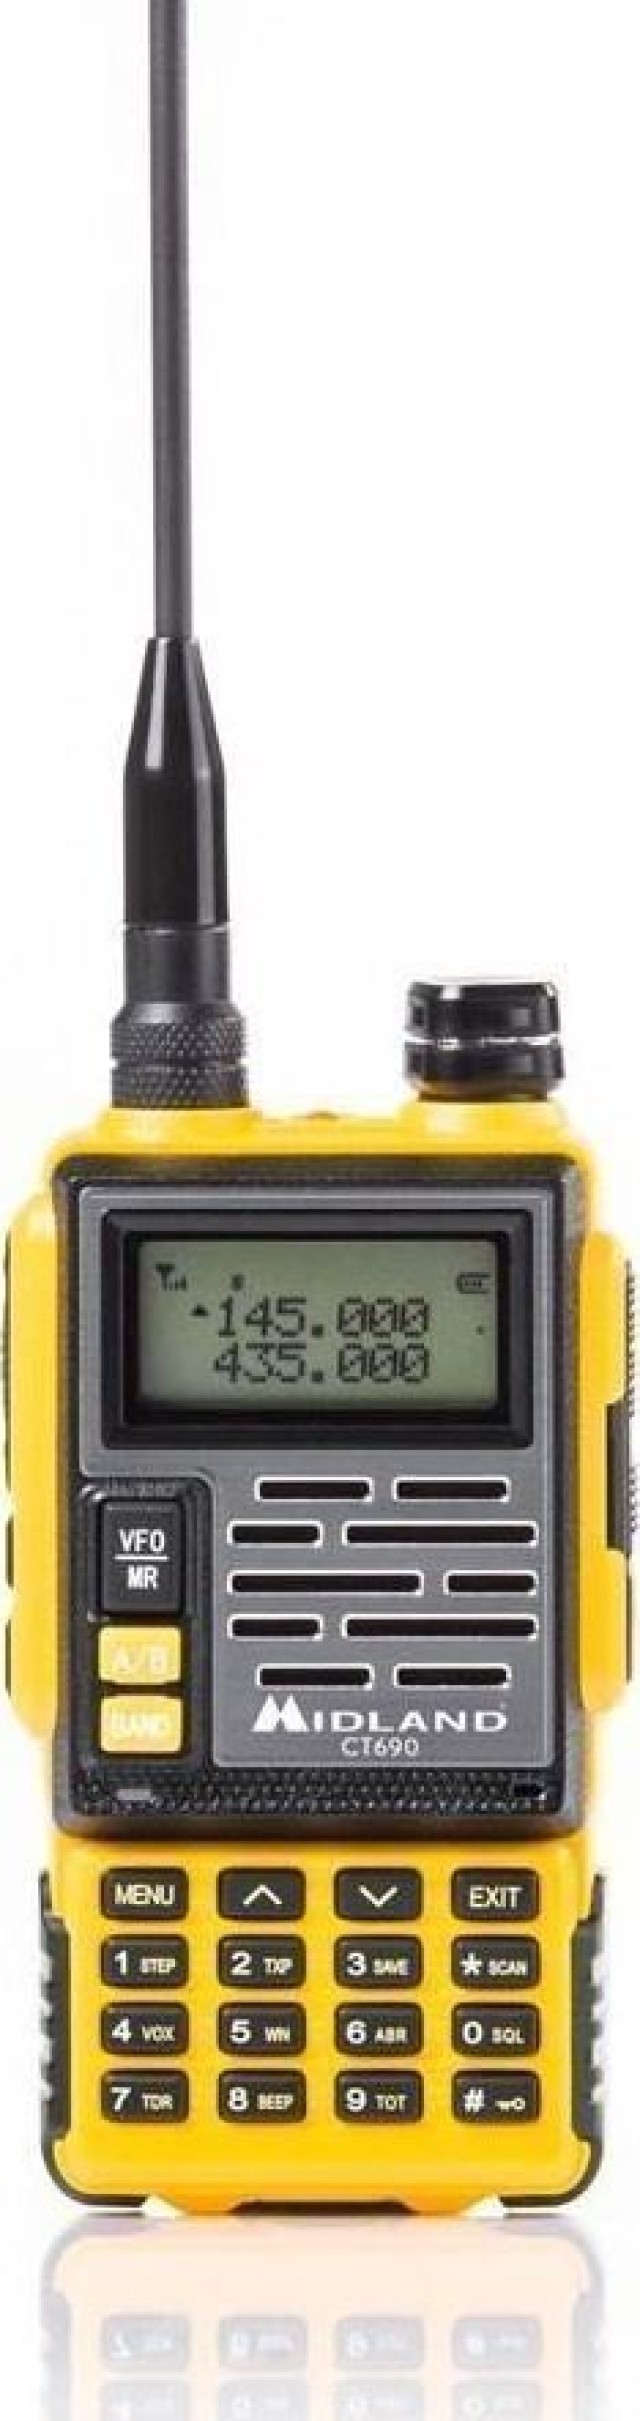 Midland CT-690 Ricetrasmettitore Portatile Dual Band VHF/UHF 6 Watt (Giallo)